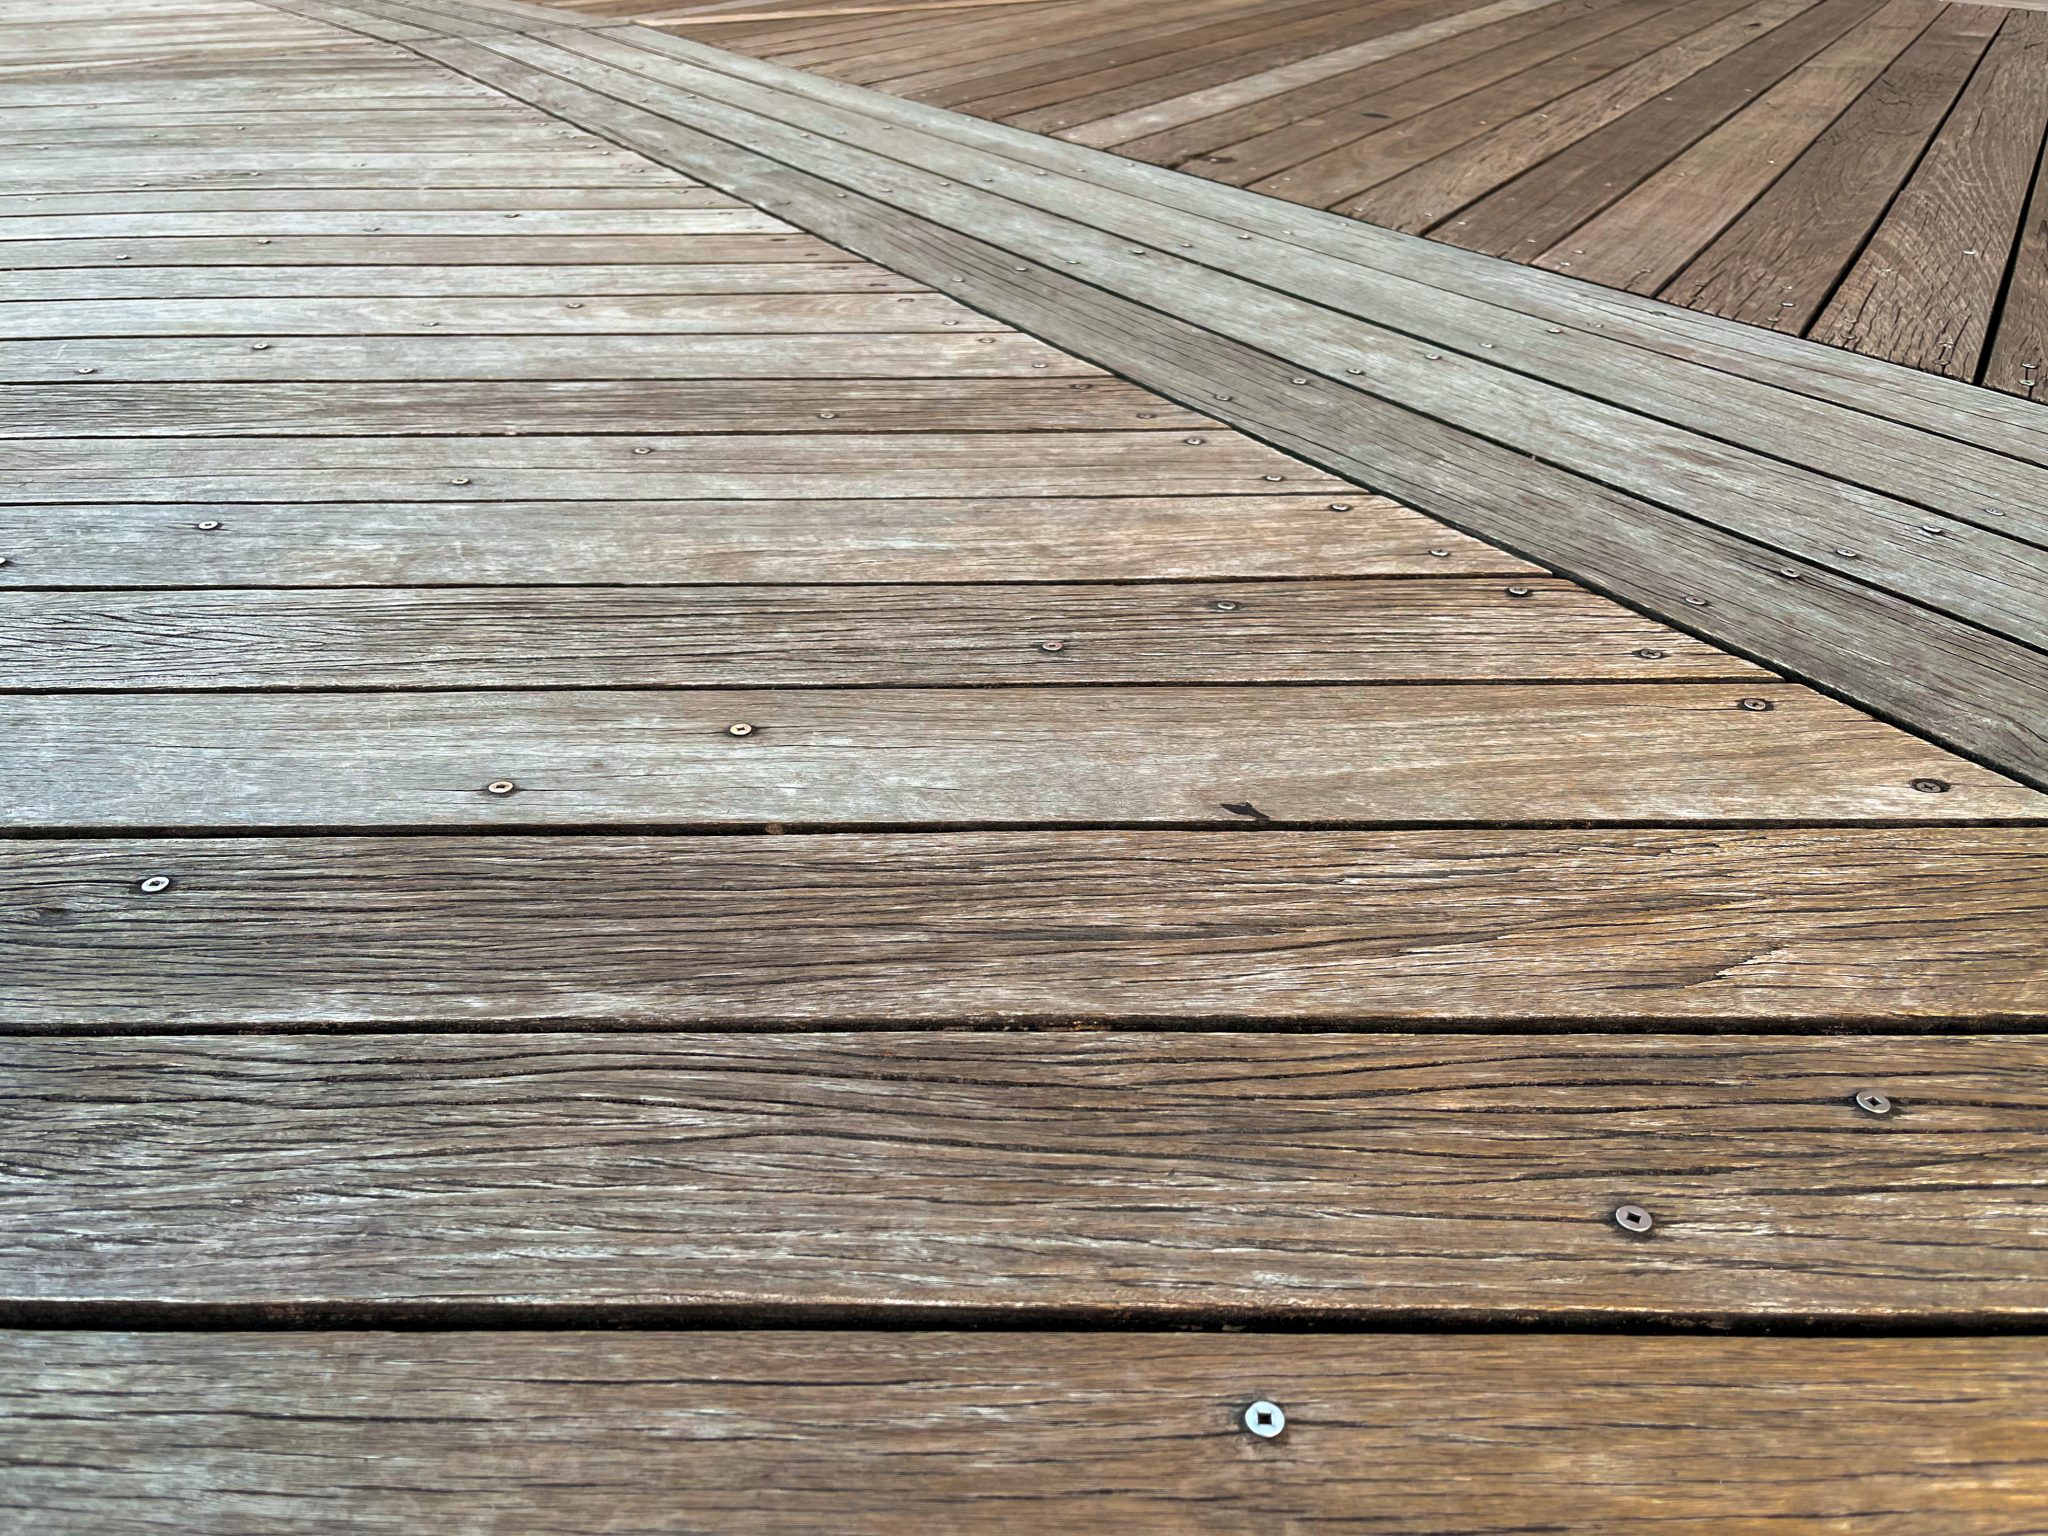 Wooden boardwalk closeup